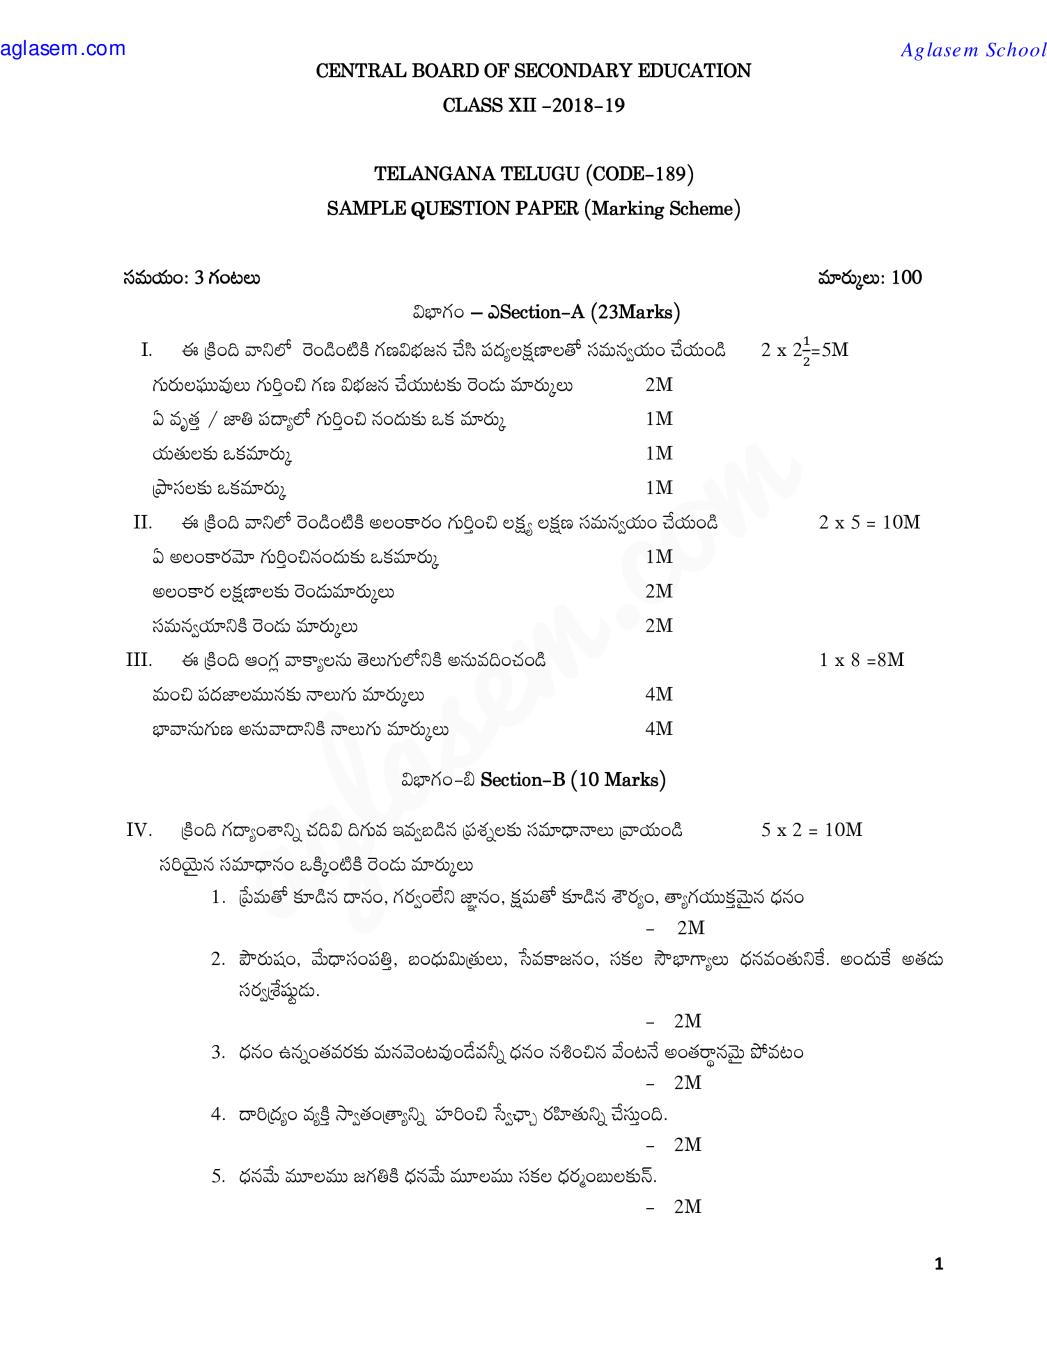 CBSE Class 12 Marking Scheme 2020 for Telugu - Page 1